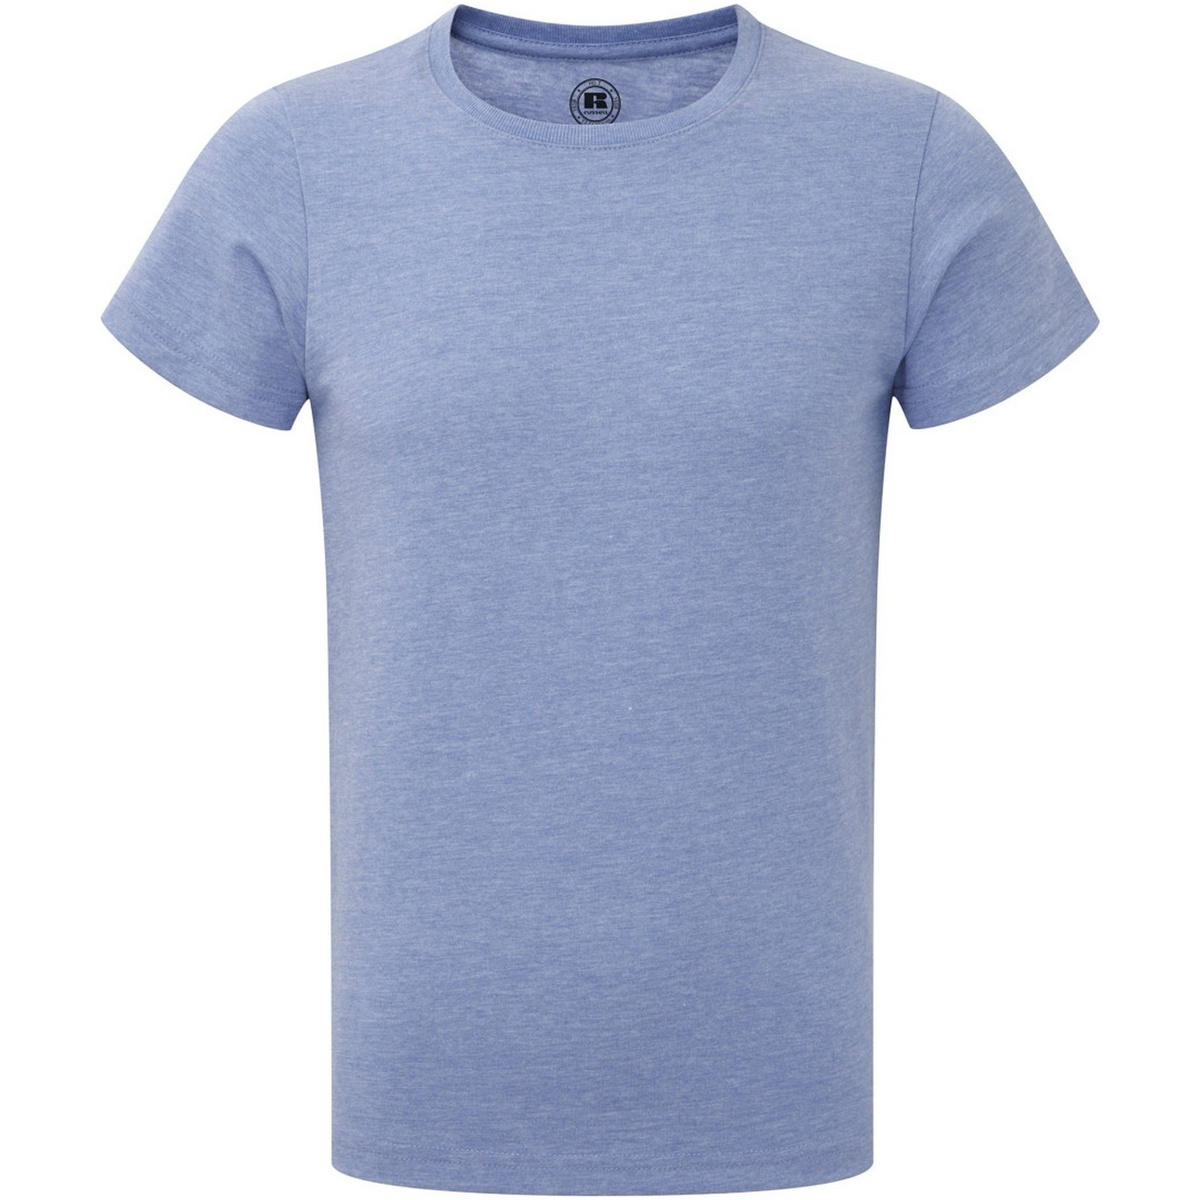 Vêtements Garçon Jordan AJ 11 CNXN T-Shirt White R165B Bleu